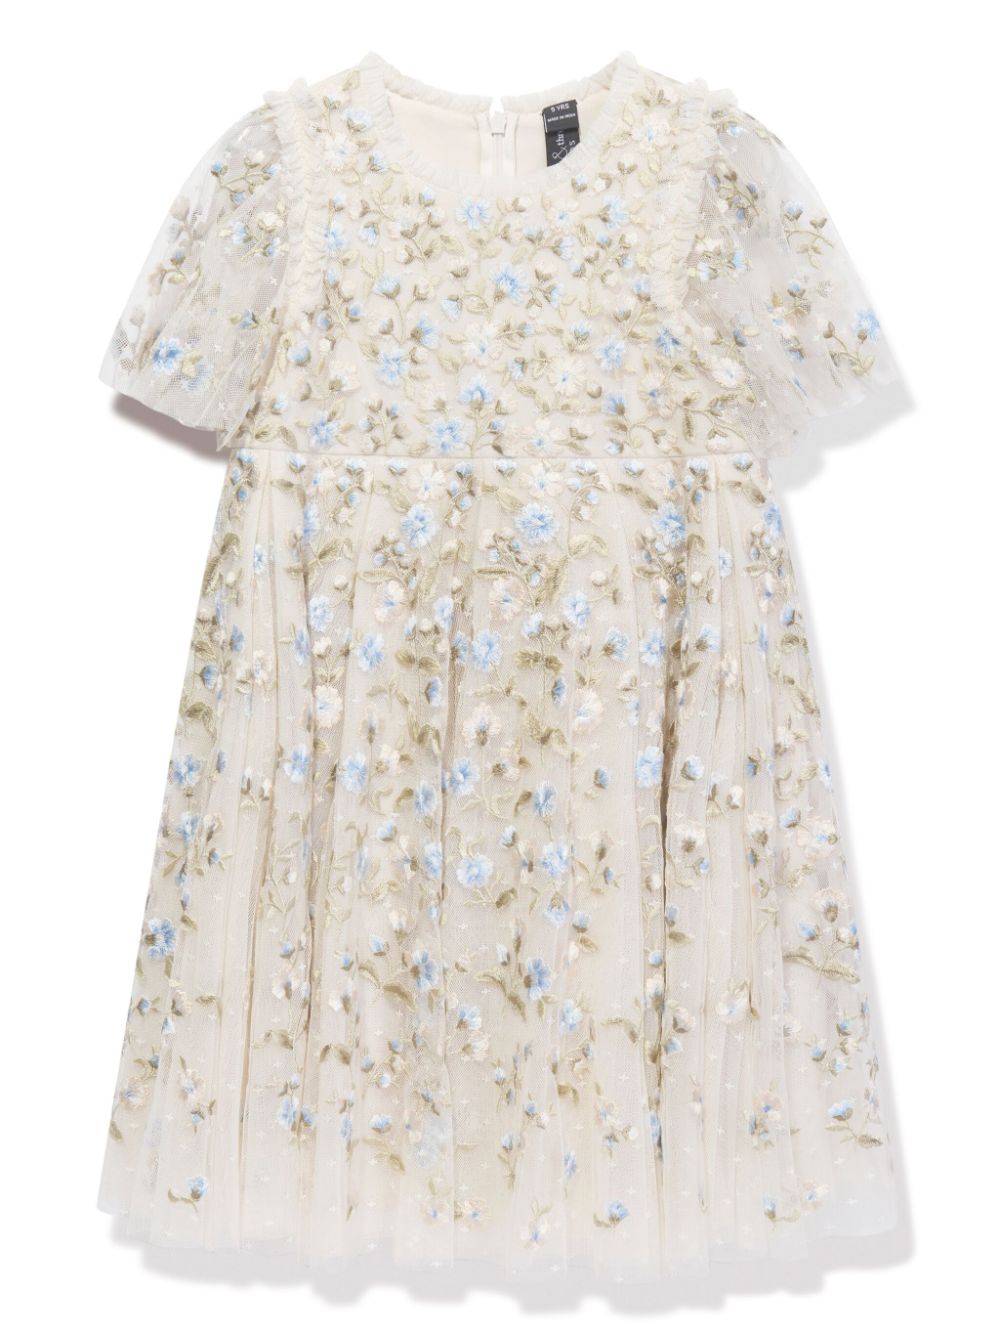 NEEDLE & THREAD KIDS floral-embroidered dress Beige